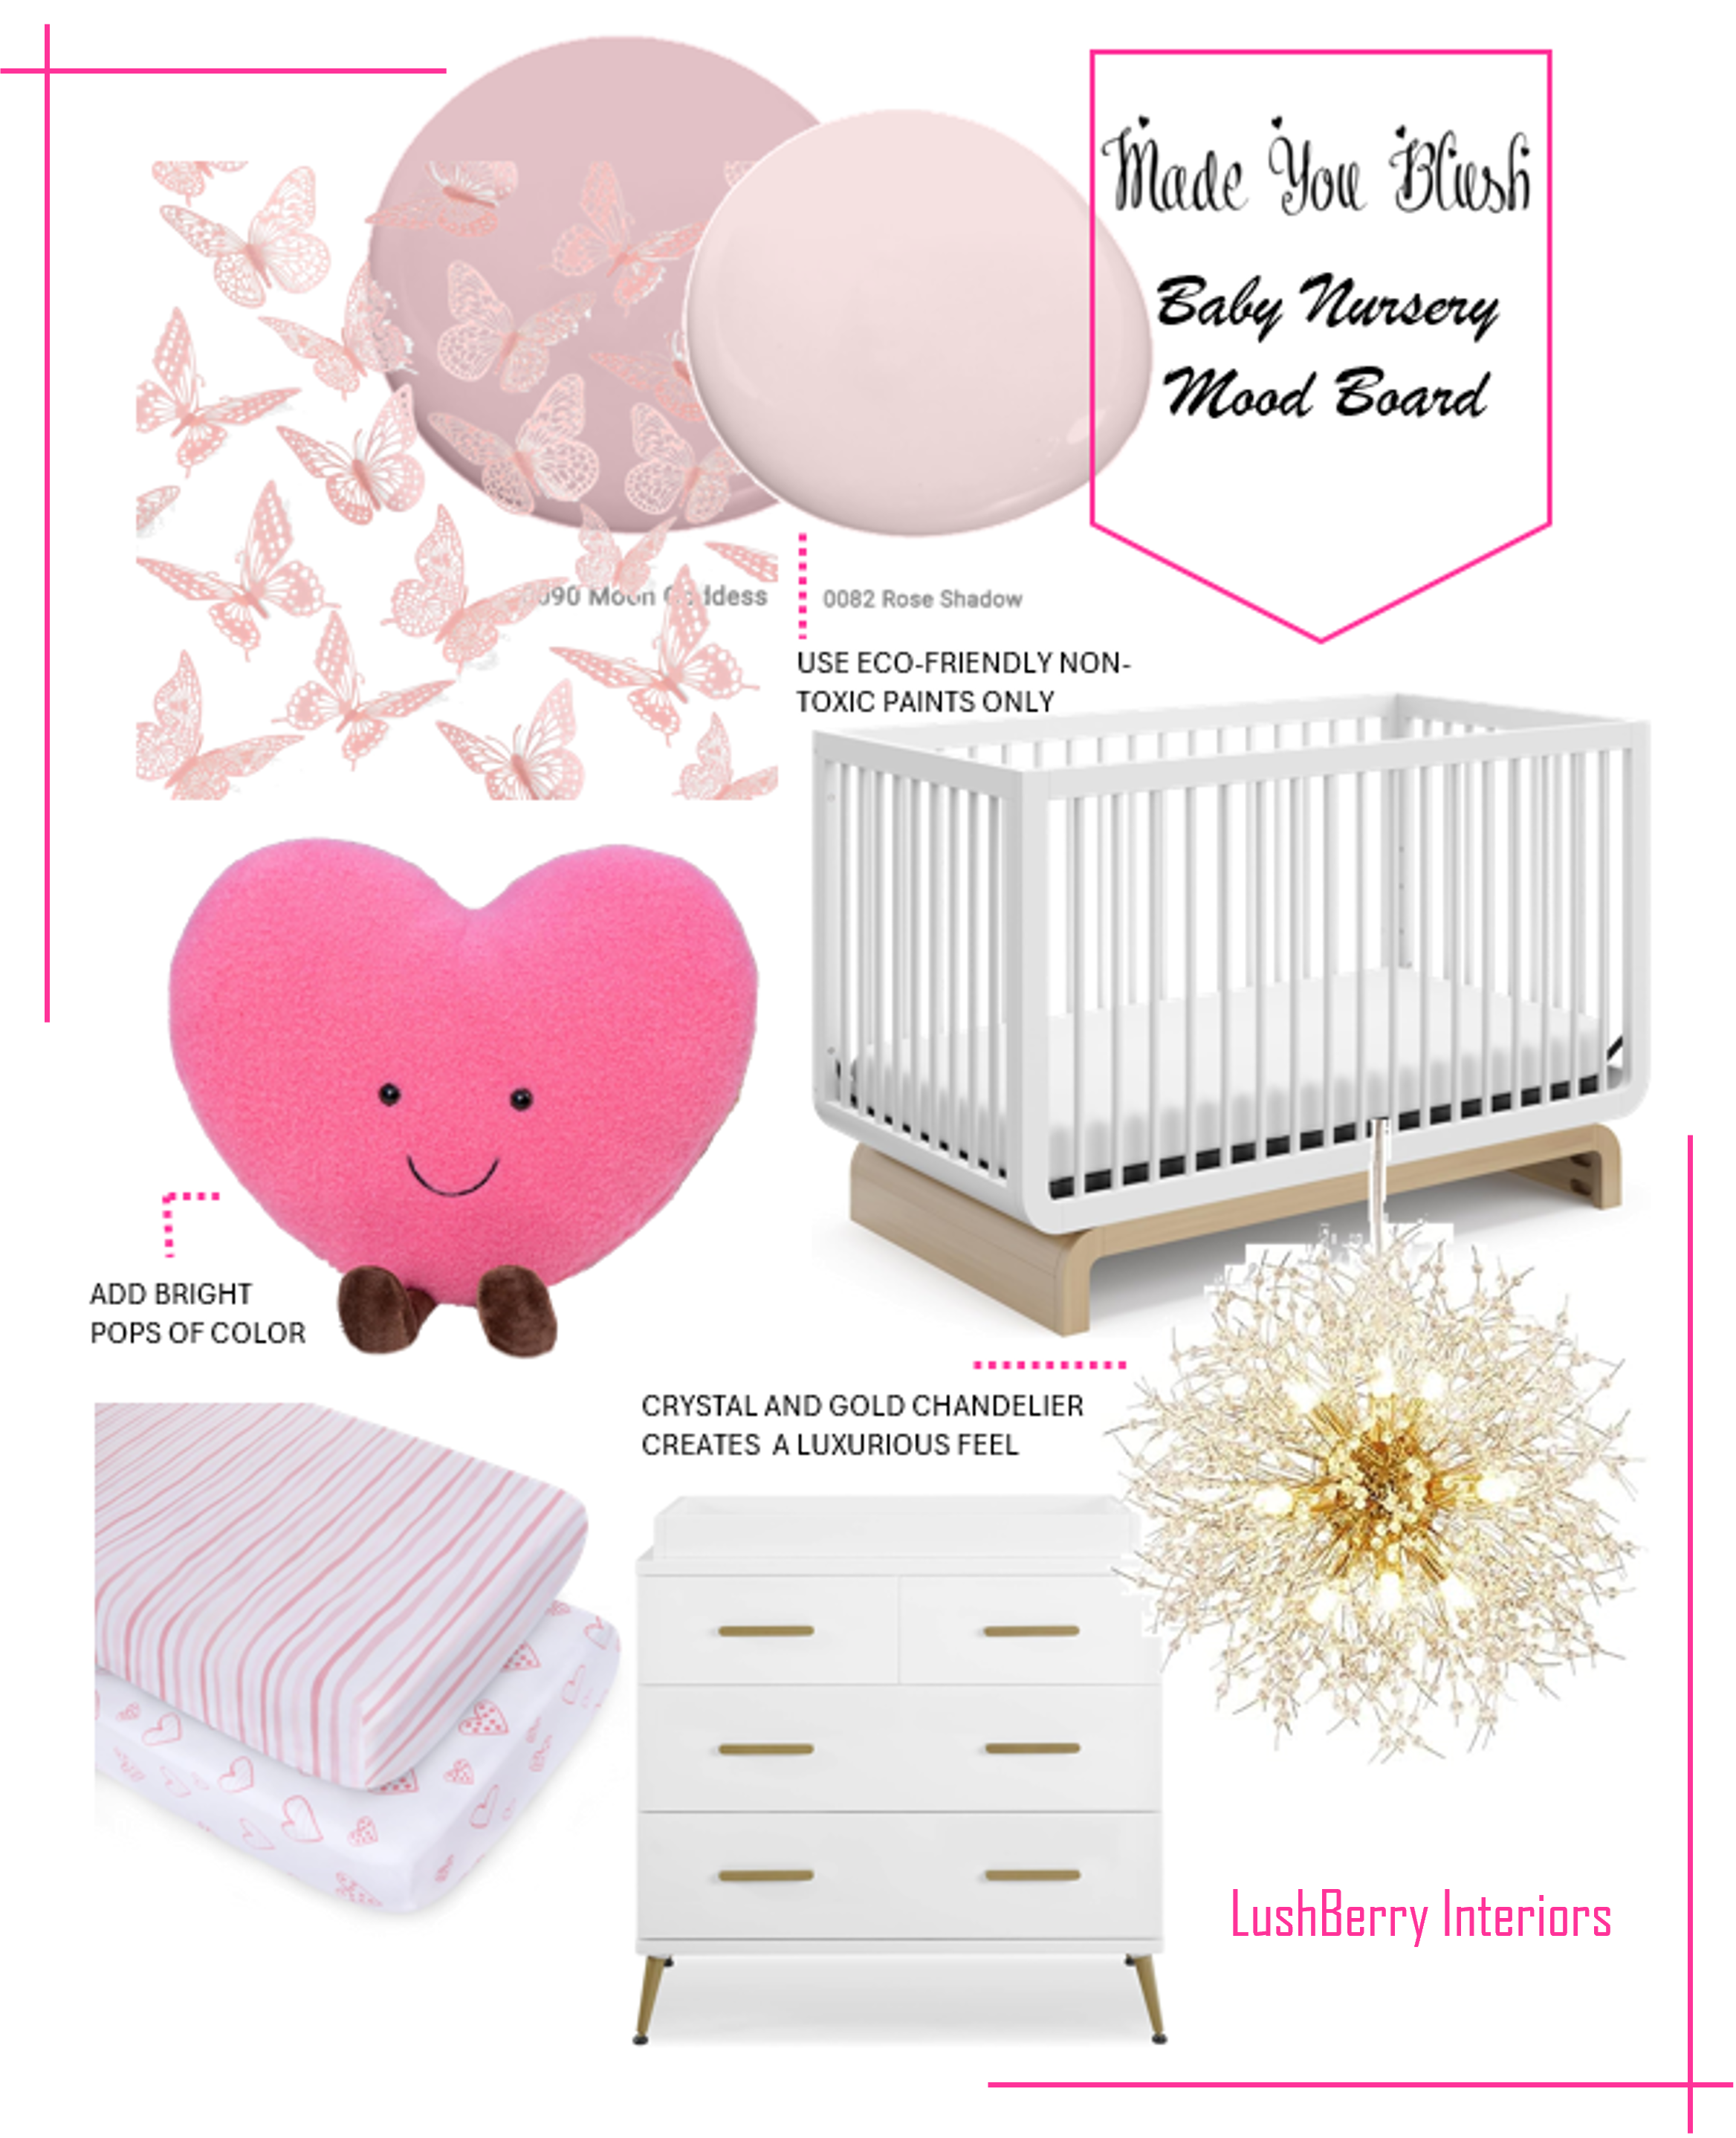 Valentine's Day Ideas - Nursery Mood board - Made You Blush